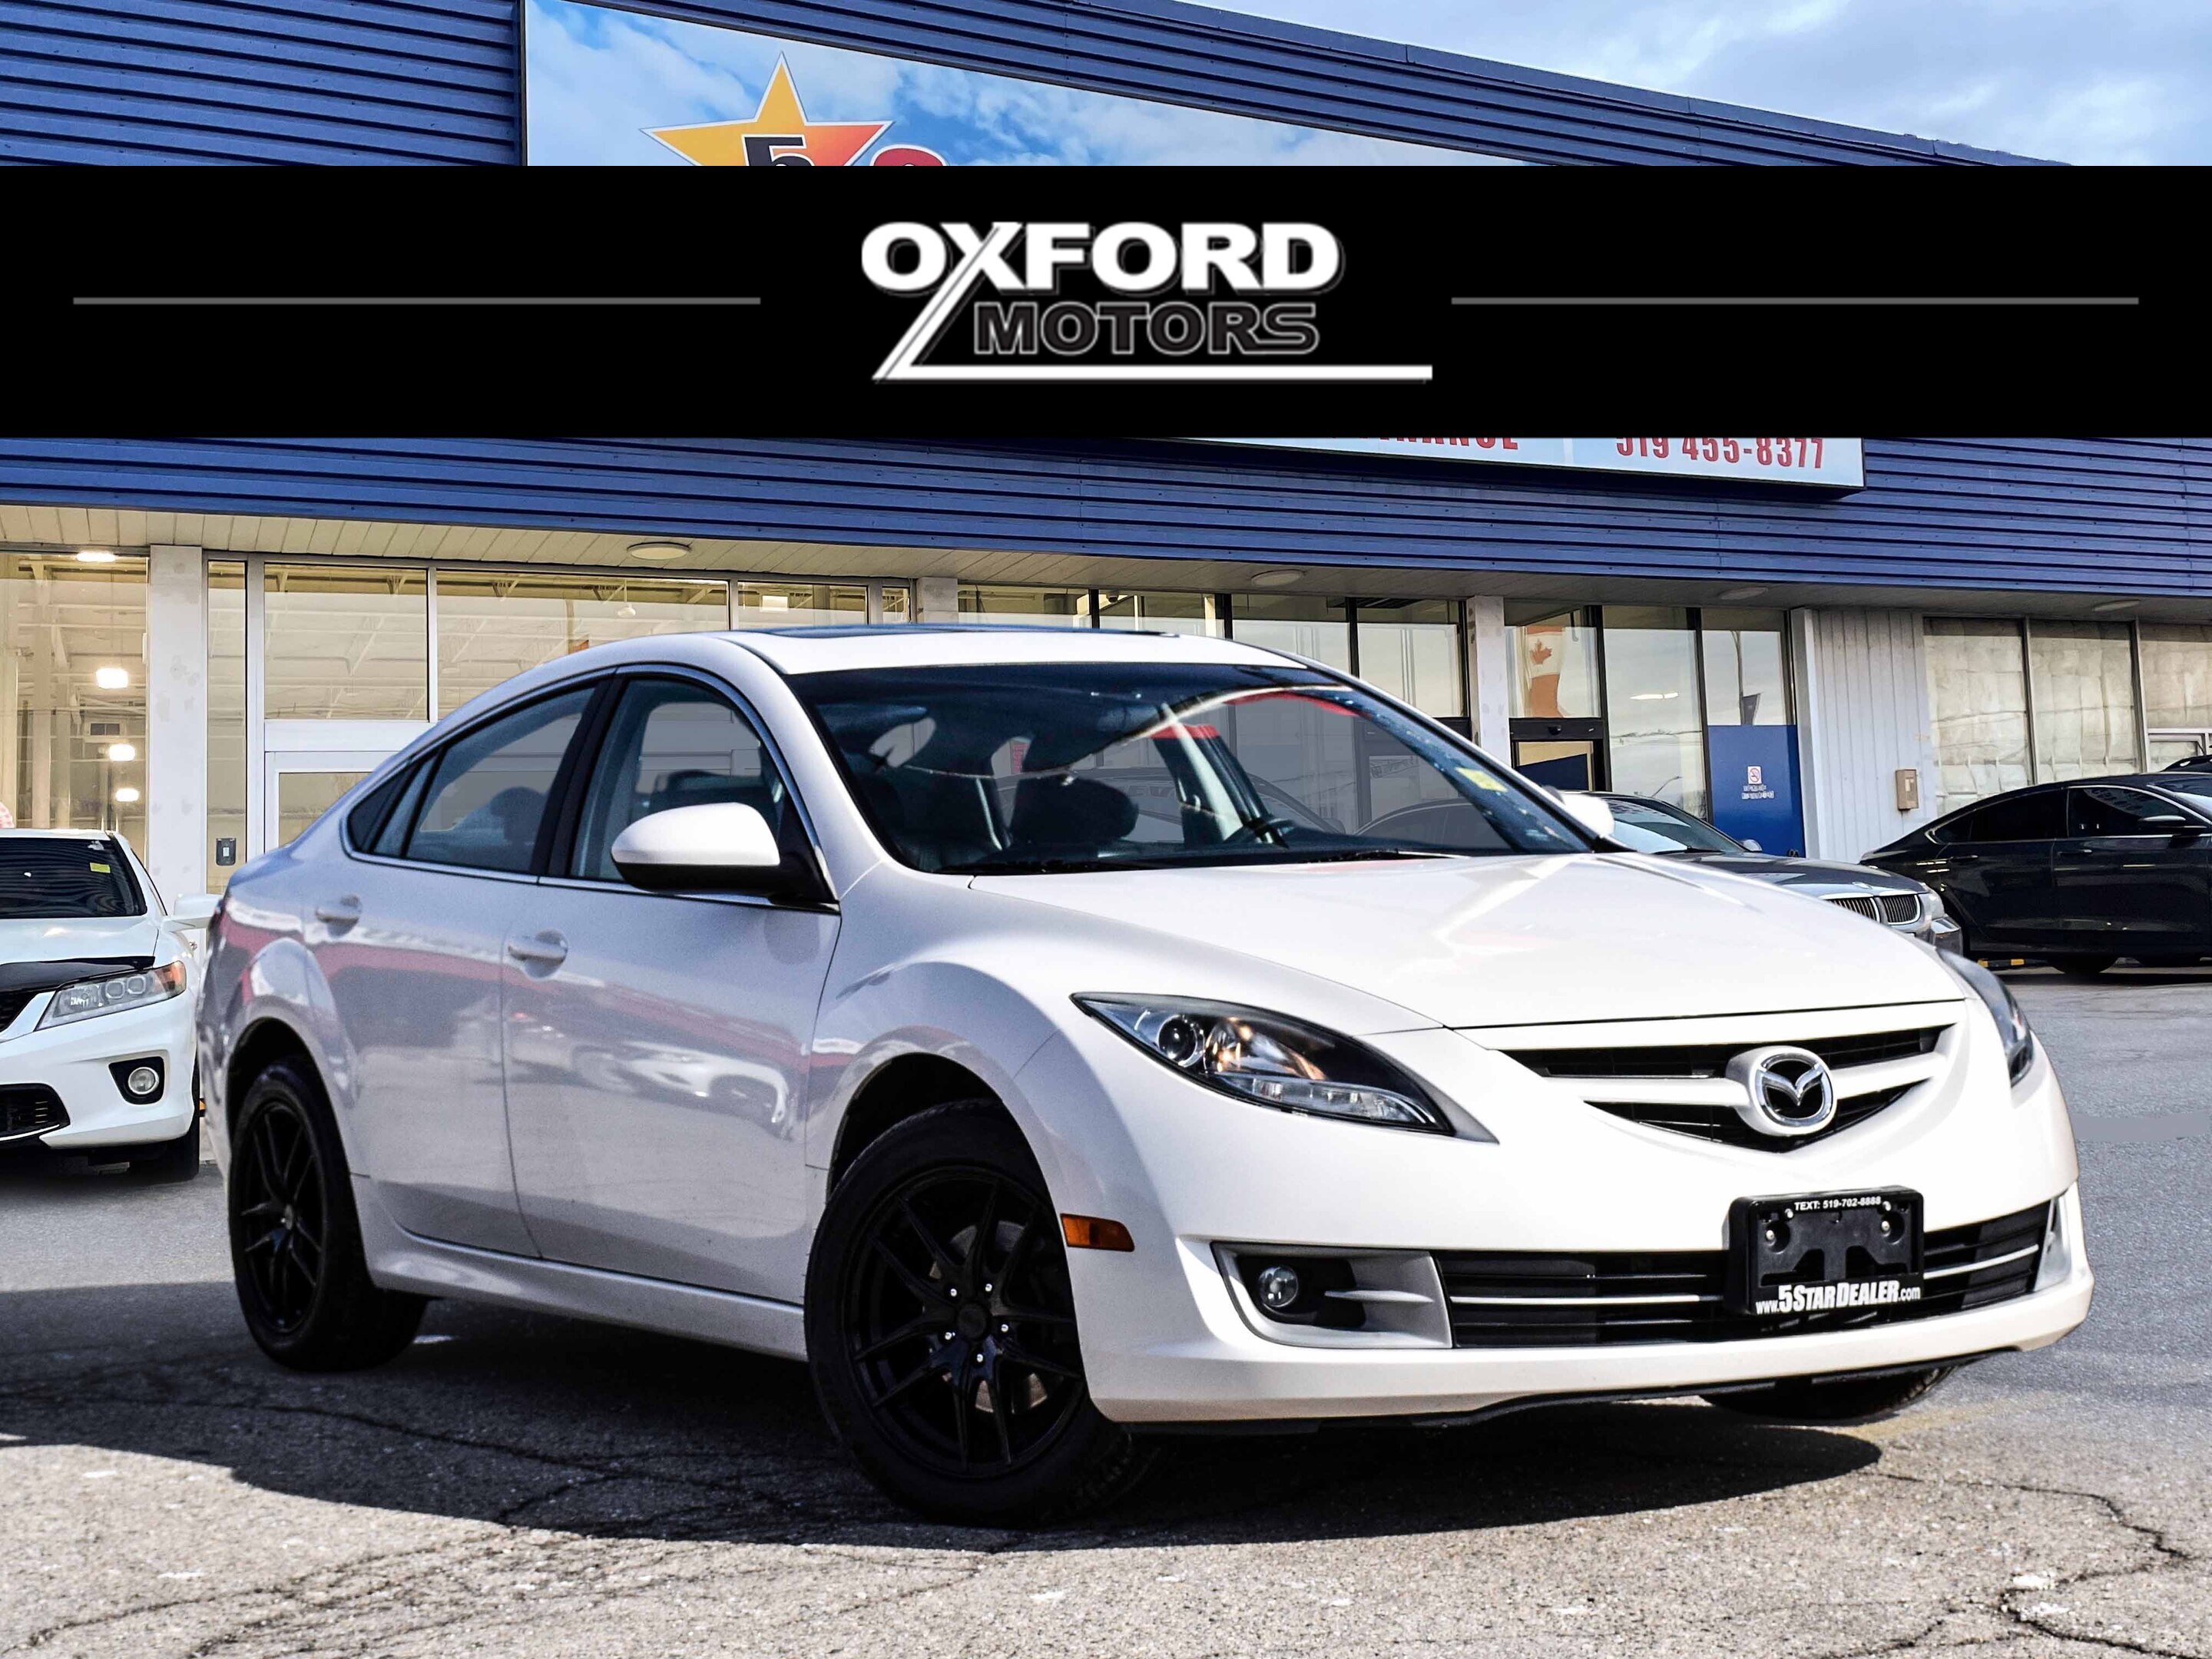 2013 Mazda Mazda6 LEATHER SUNROOF MINT! WE FINANCE ALL CREDIT!